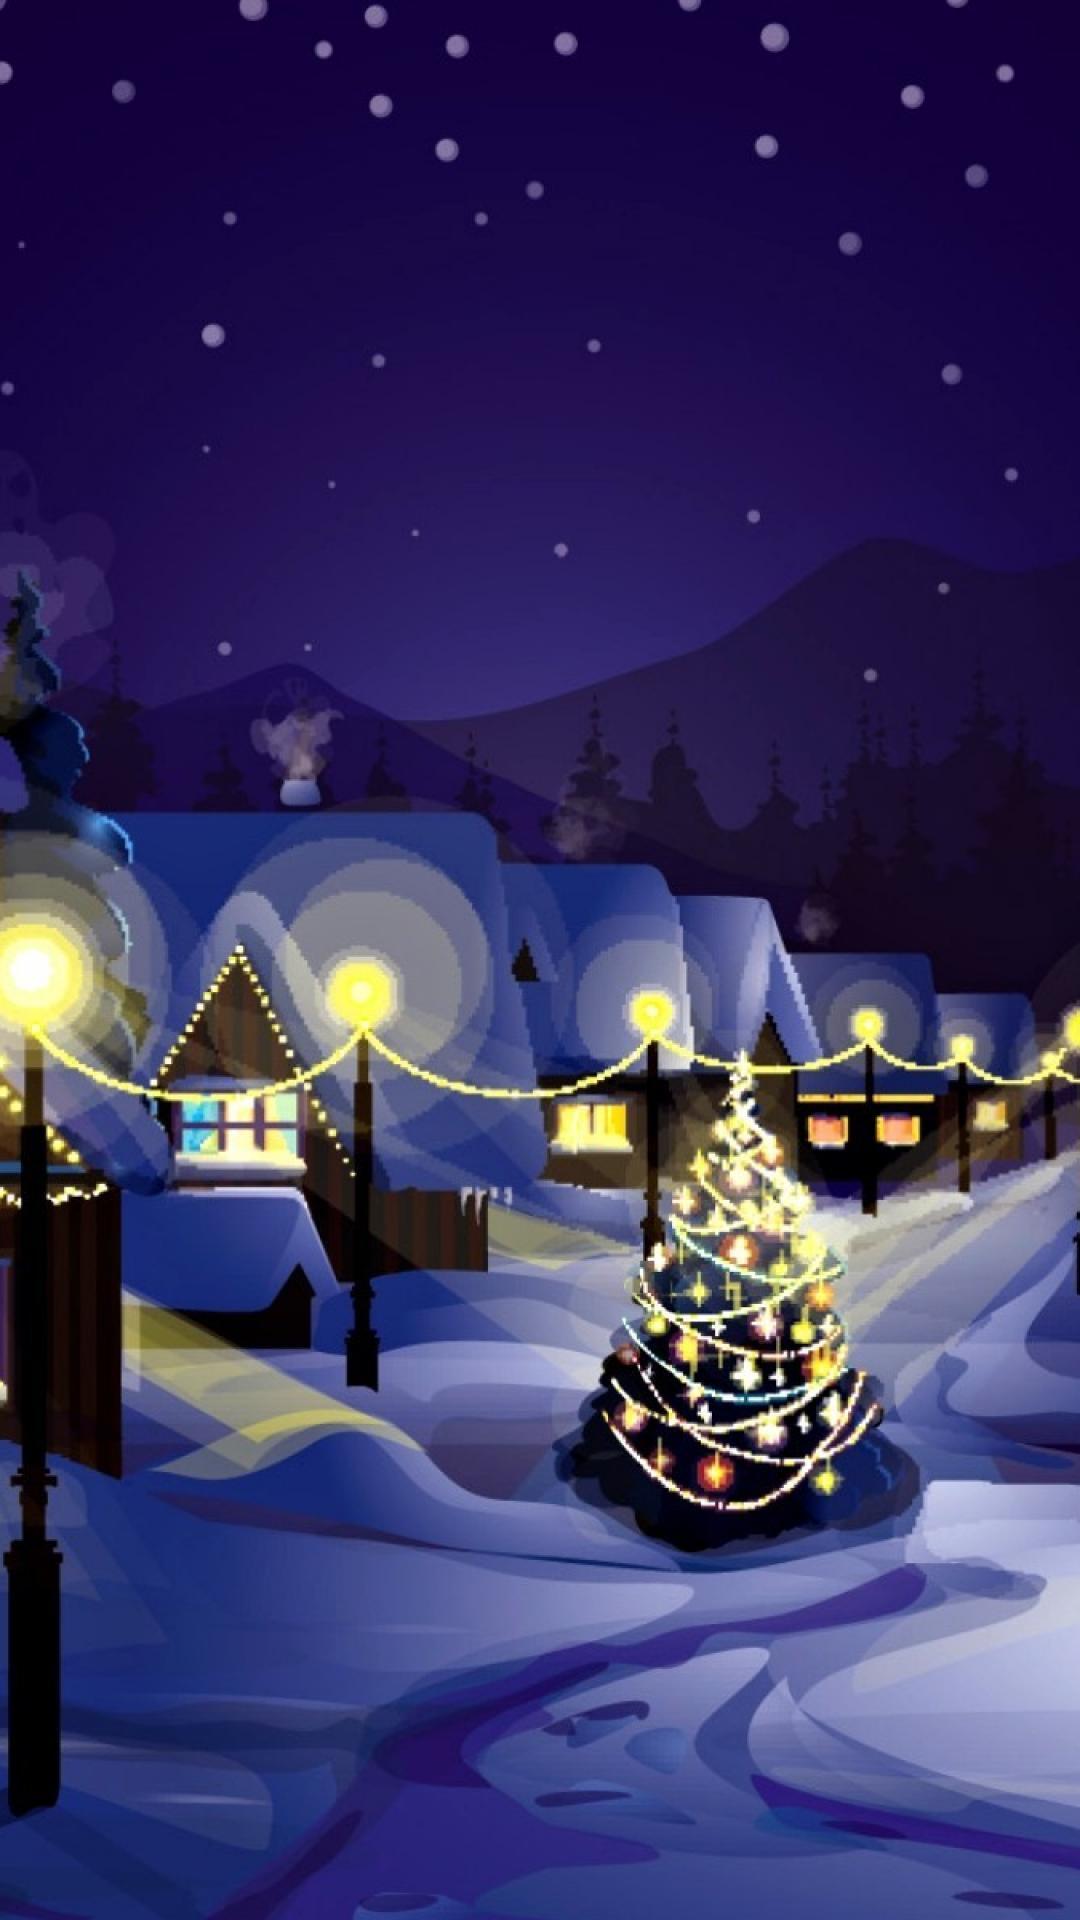 Christmas Village Wallpaper HD